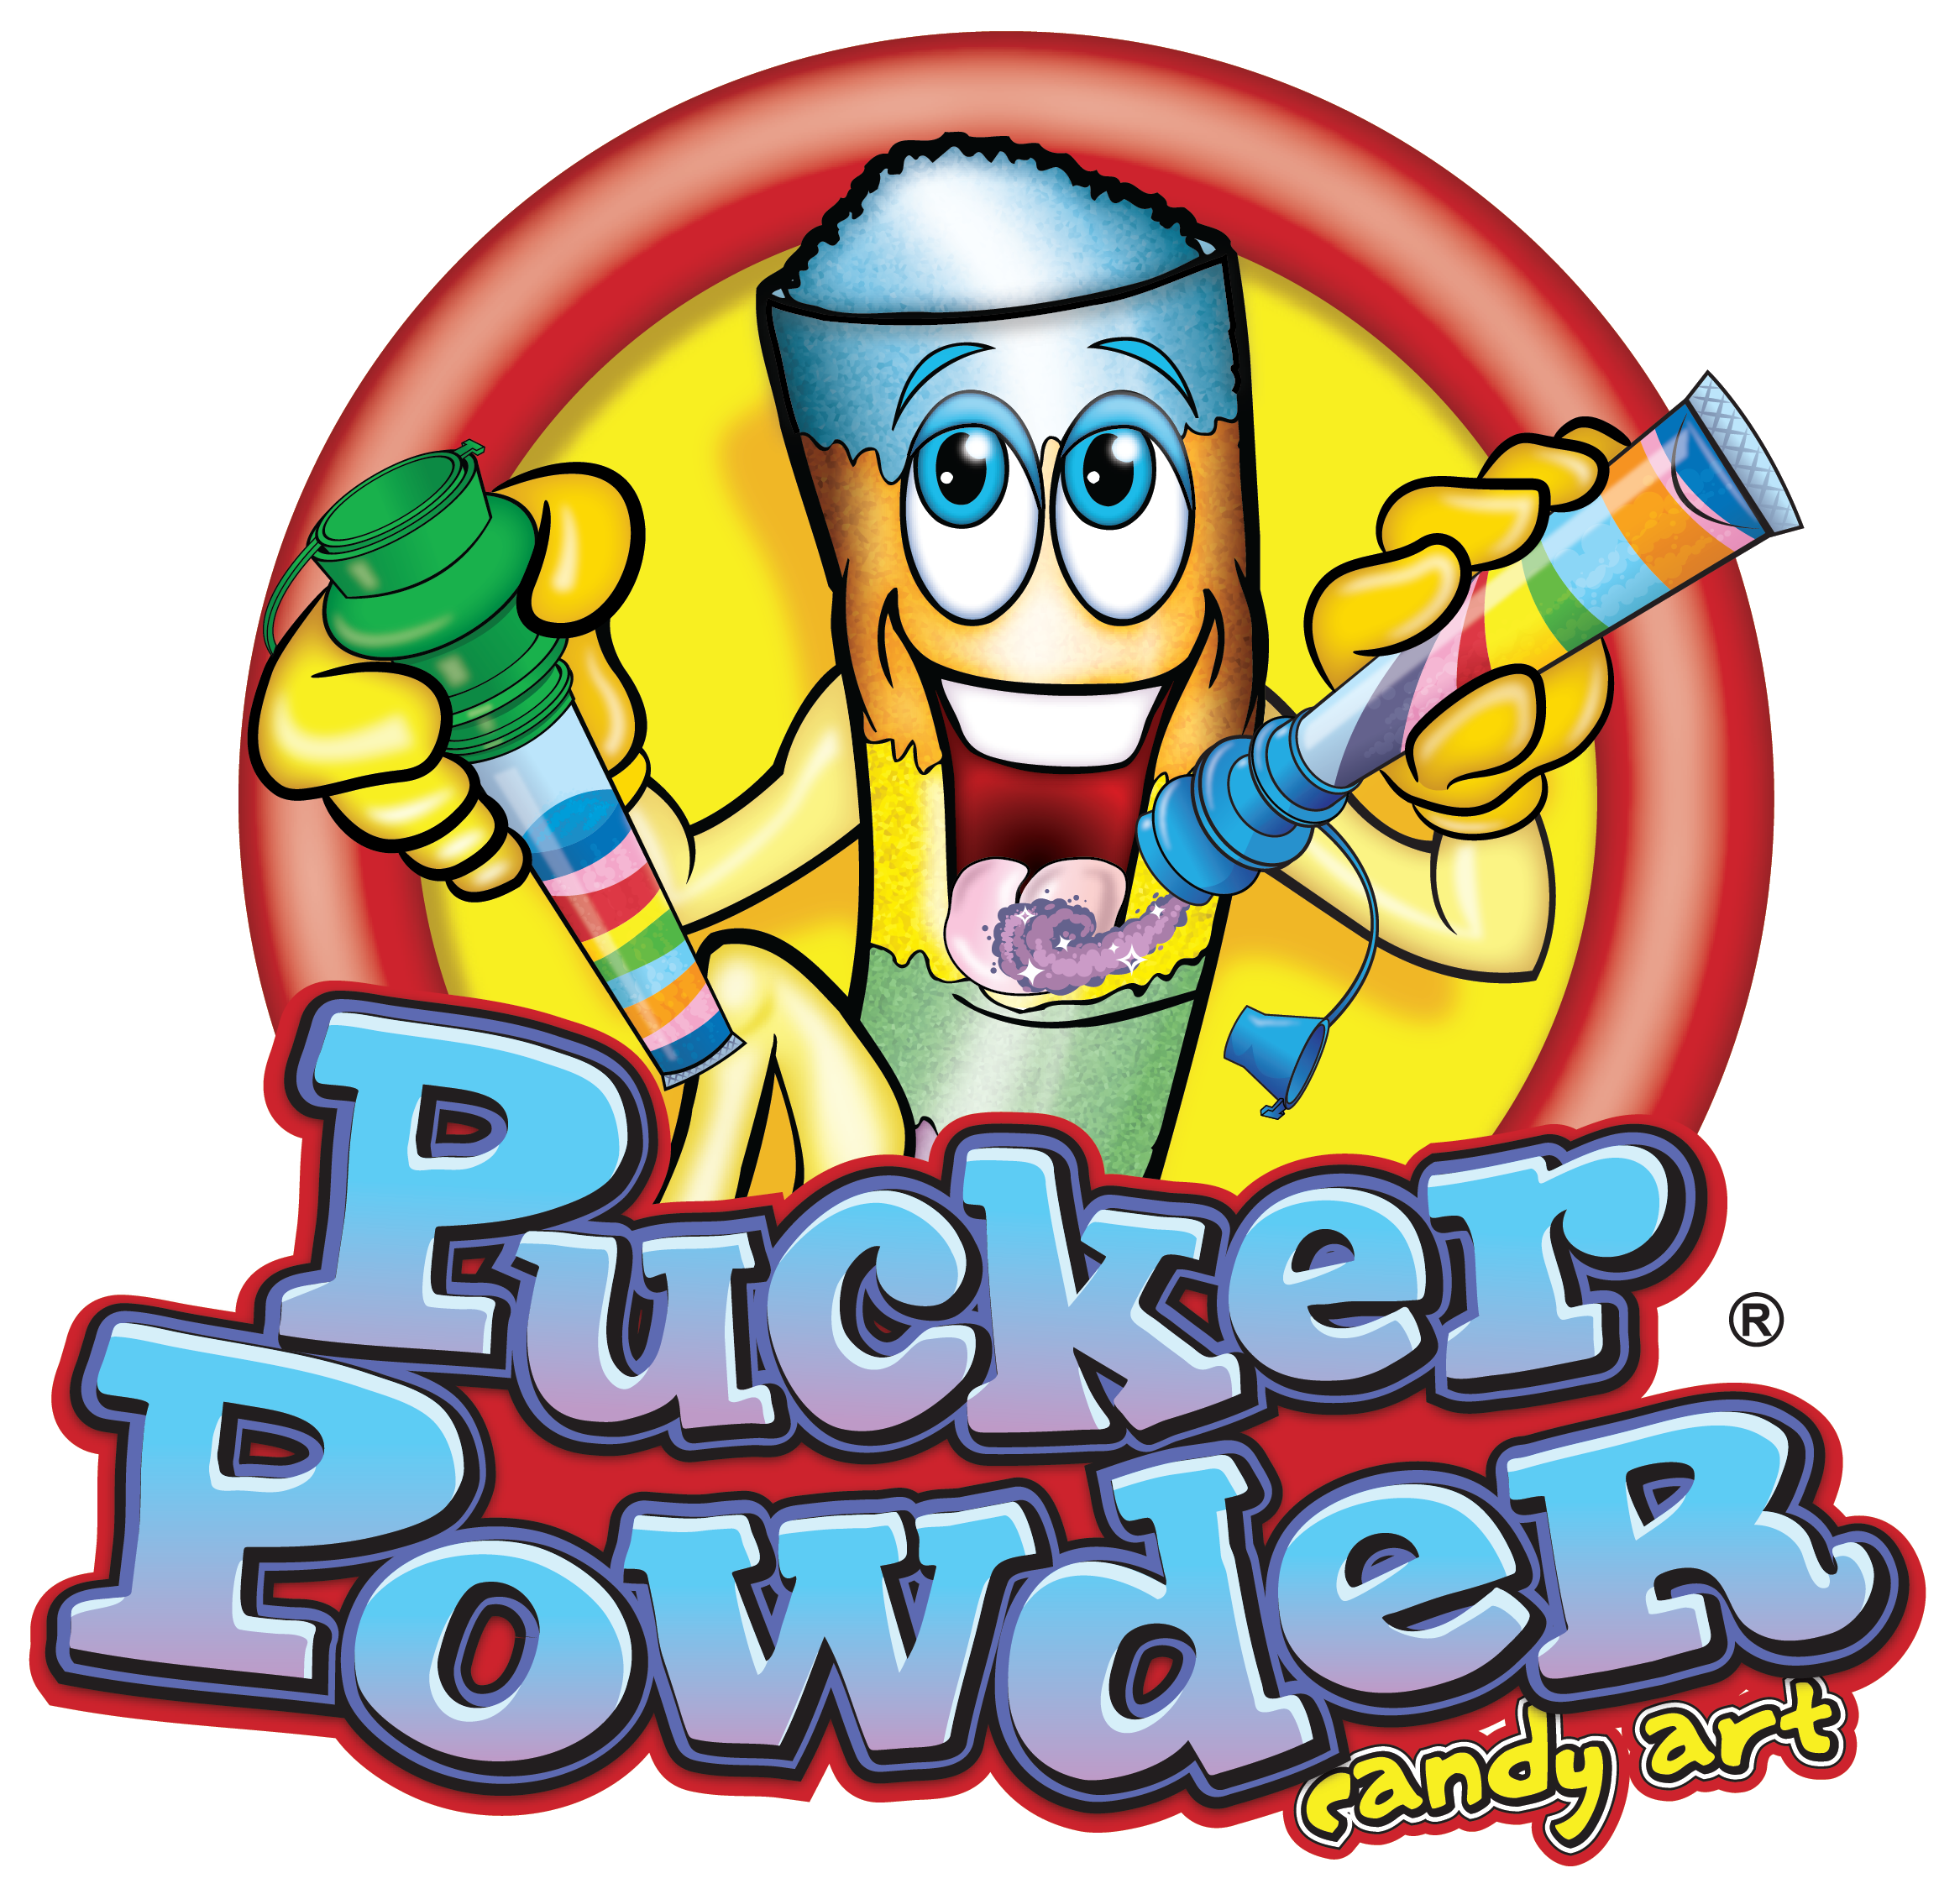 Pucker Powder Logo - Pucker Powder Logo (2358x2255)